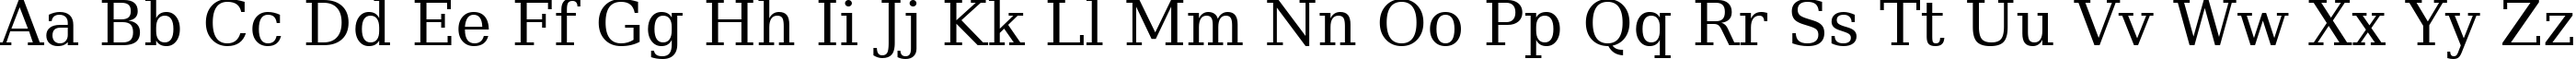 Пример написания английского алфавита шрифтом ae_Granada